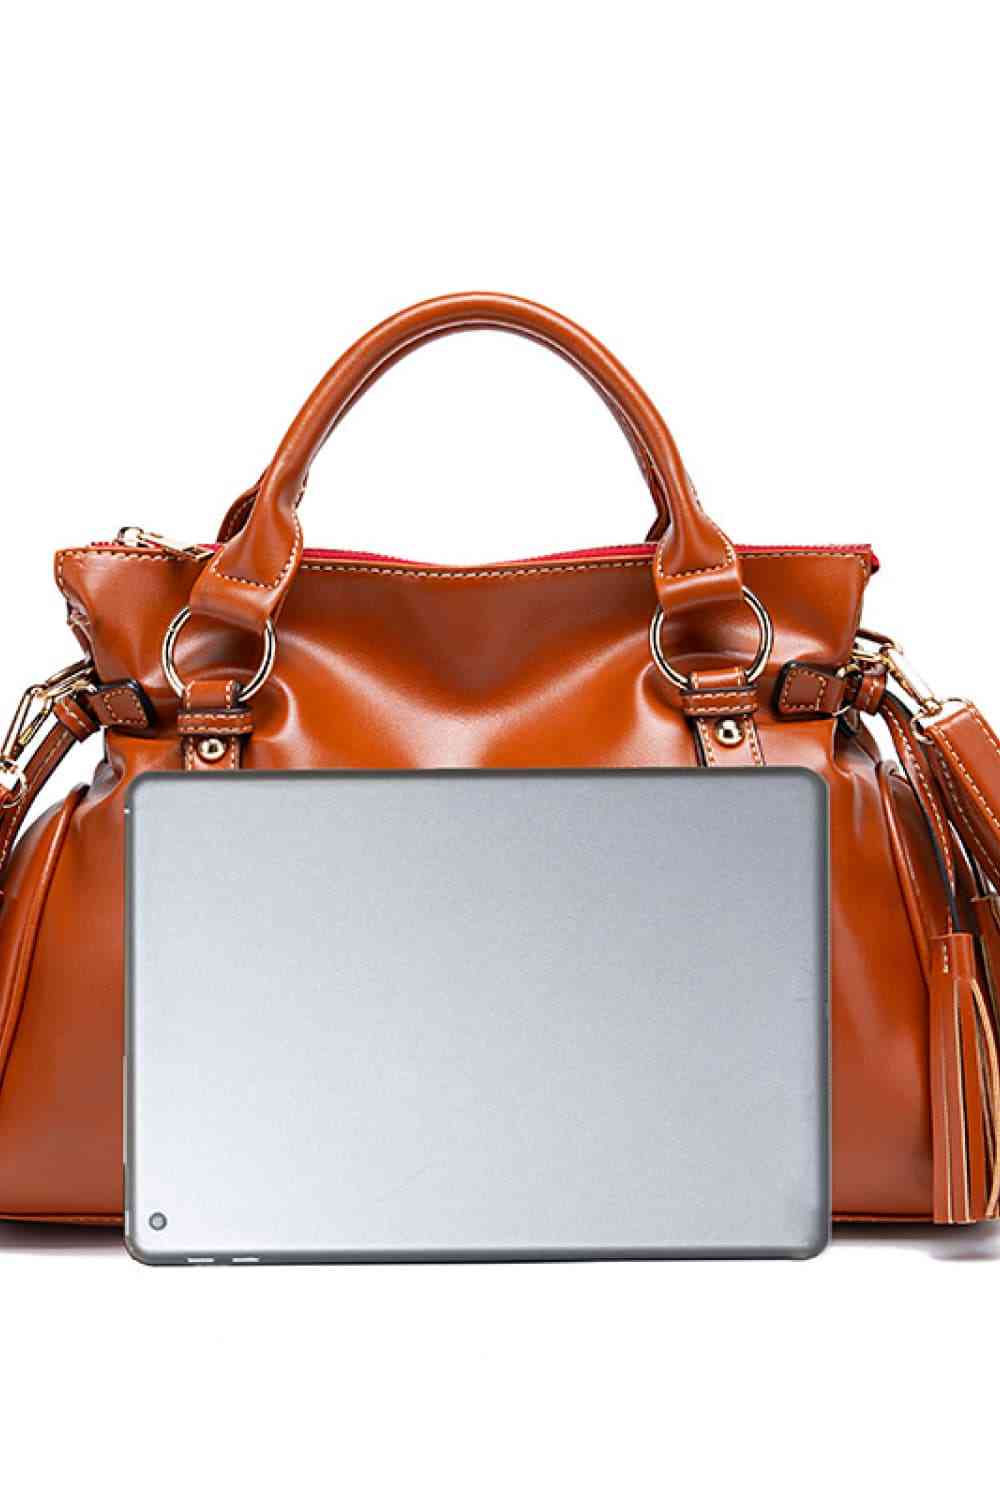 PU Leather Handbag with Tassels - Handbag - FITGGINS